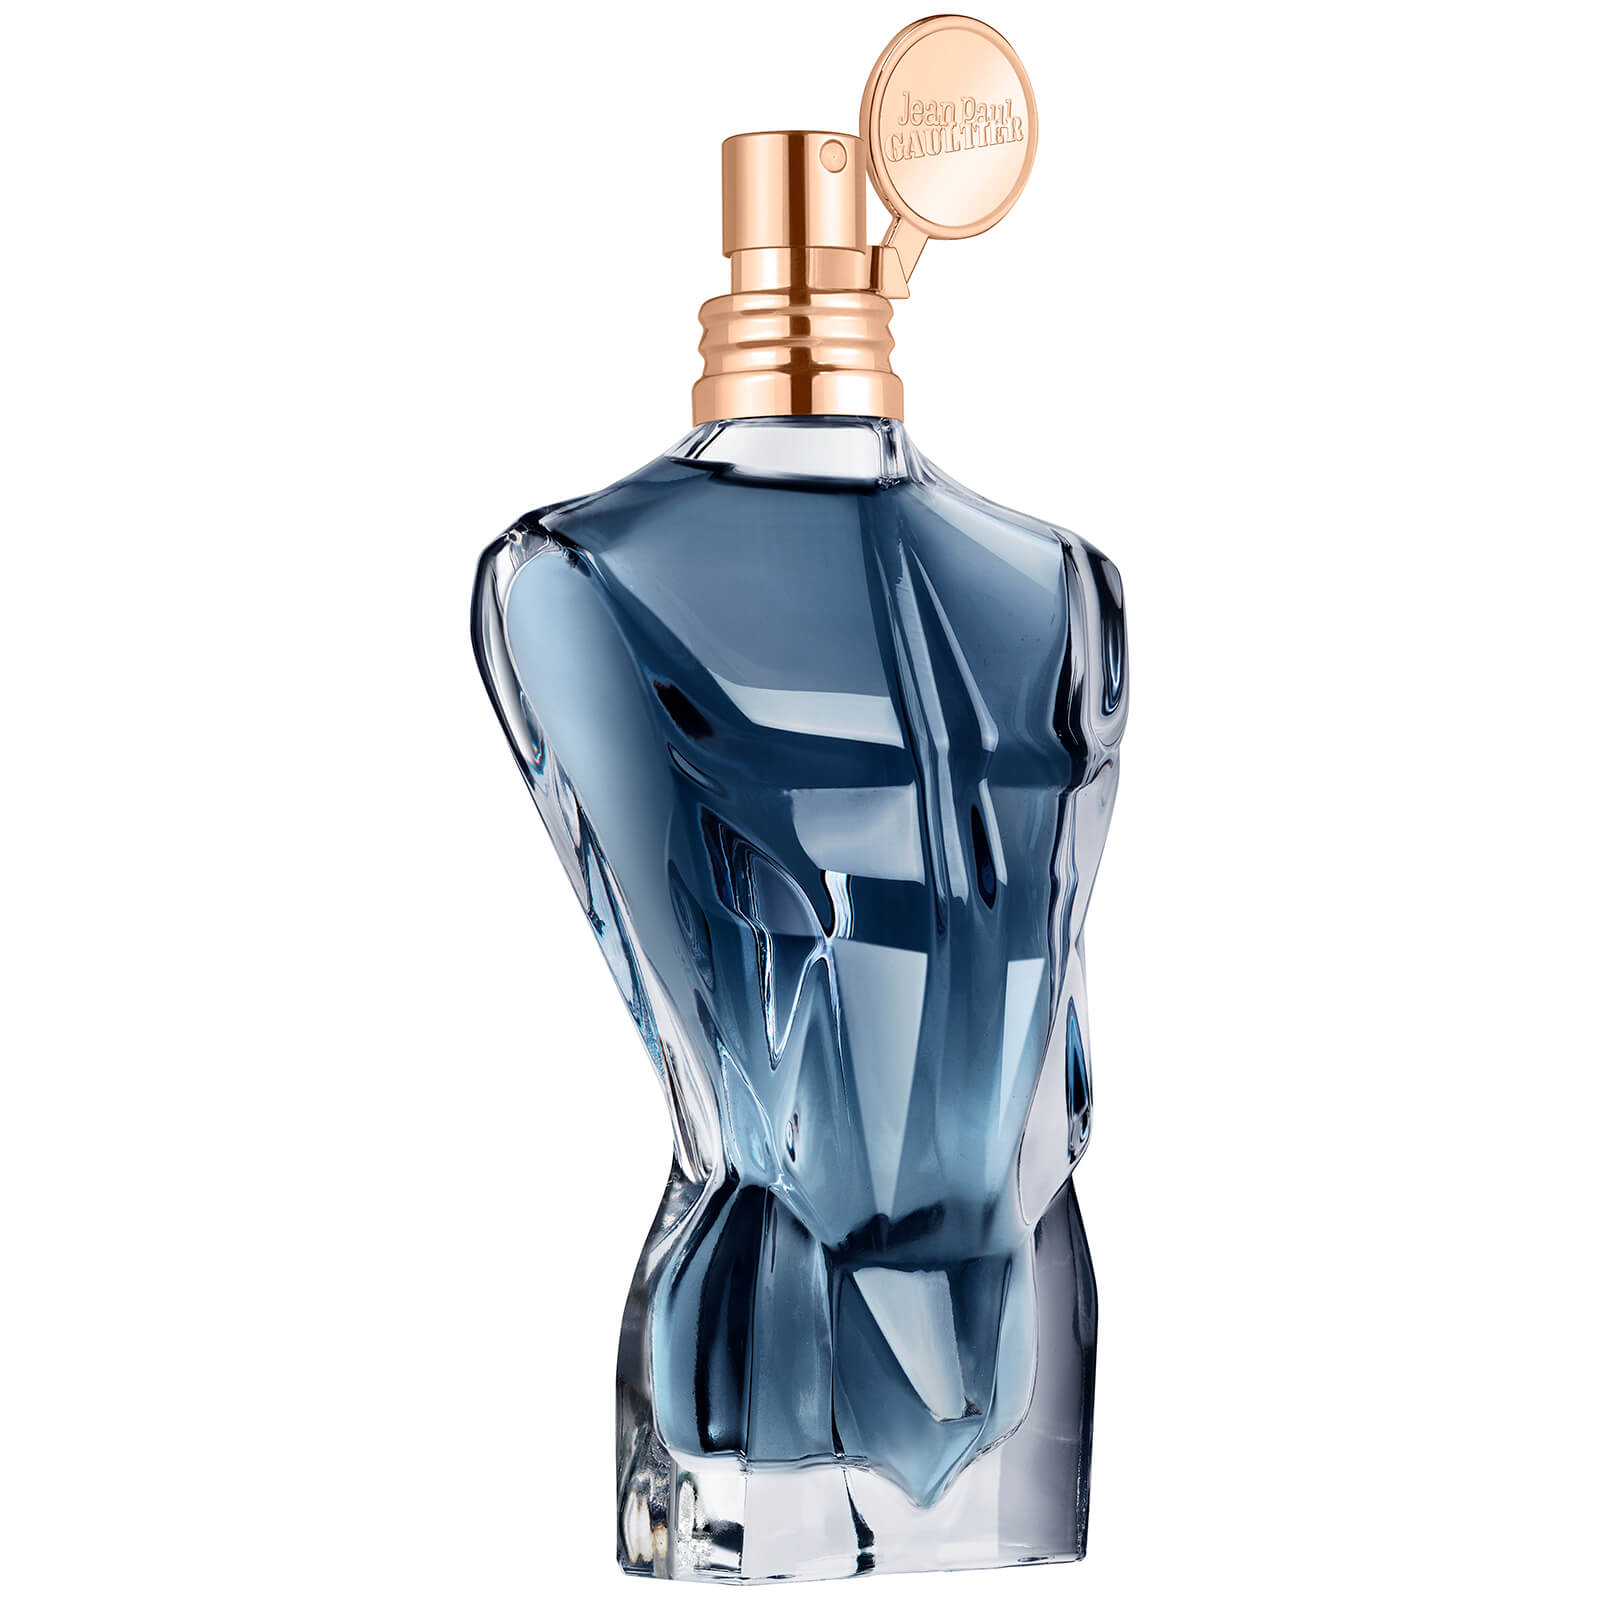 Eau de Parfum Le Male Essence de Jean Paul Gaultier 75 ml